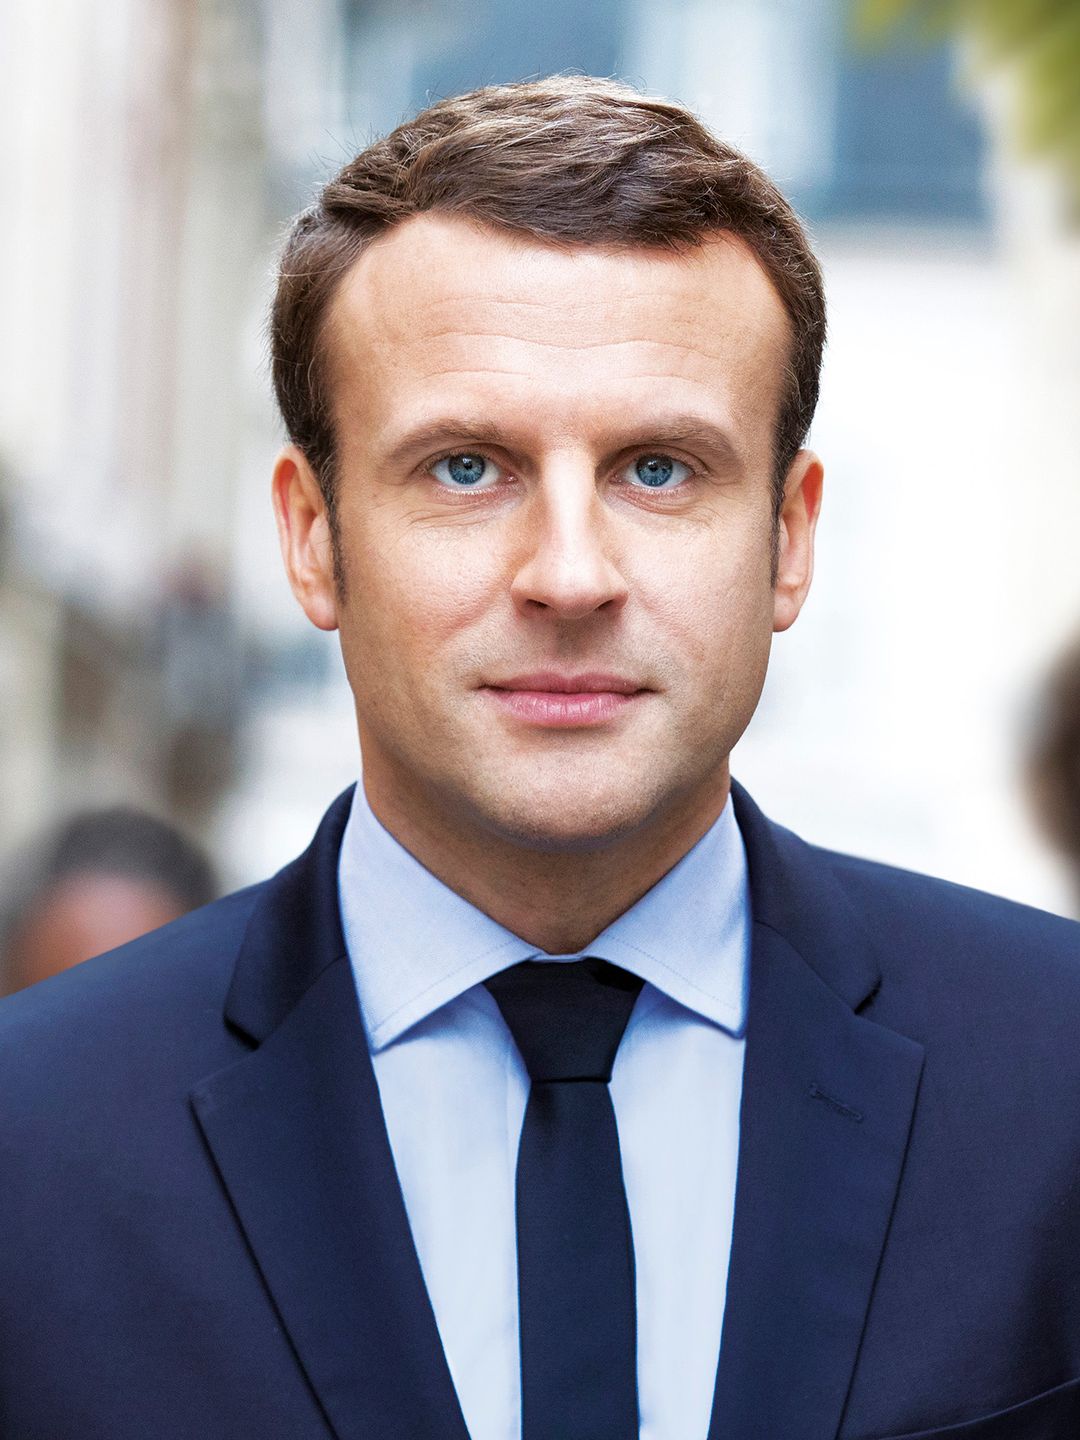 Emmanuel Macron how old is he